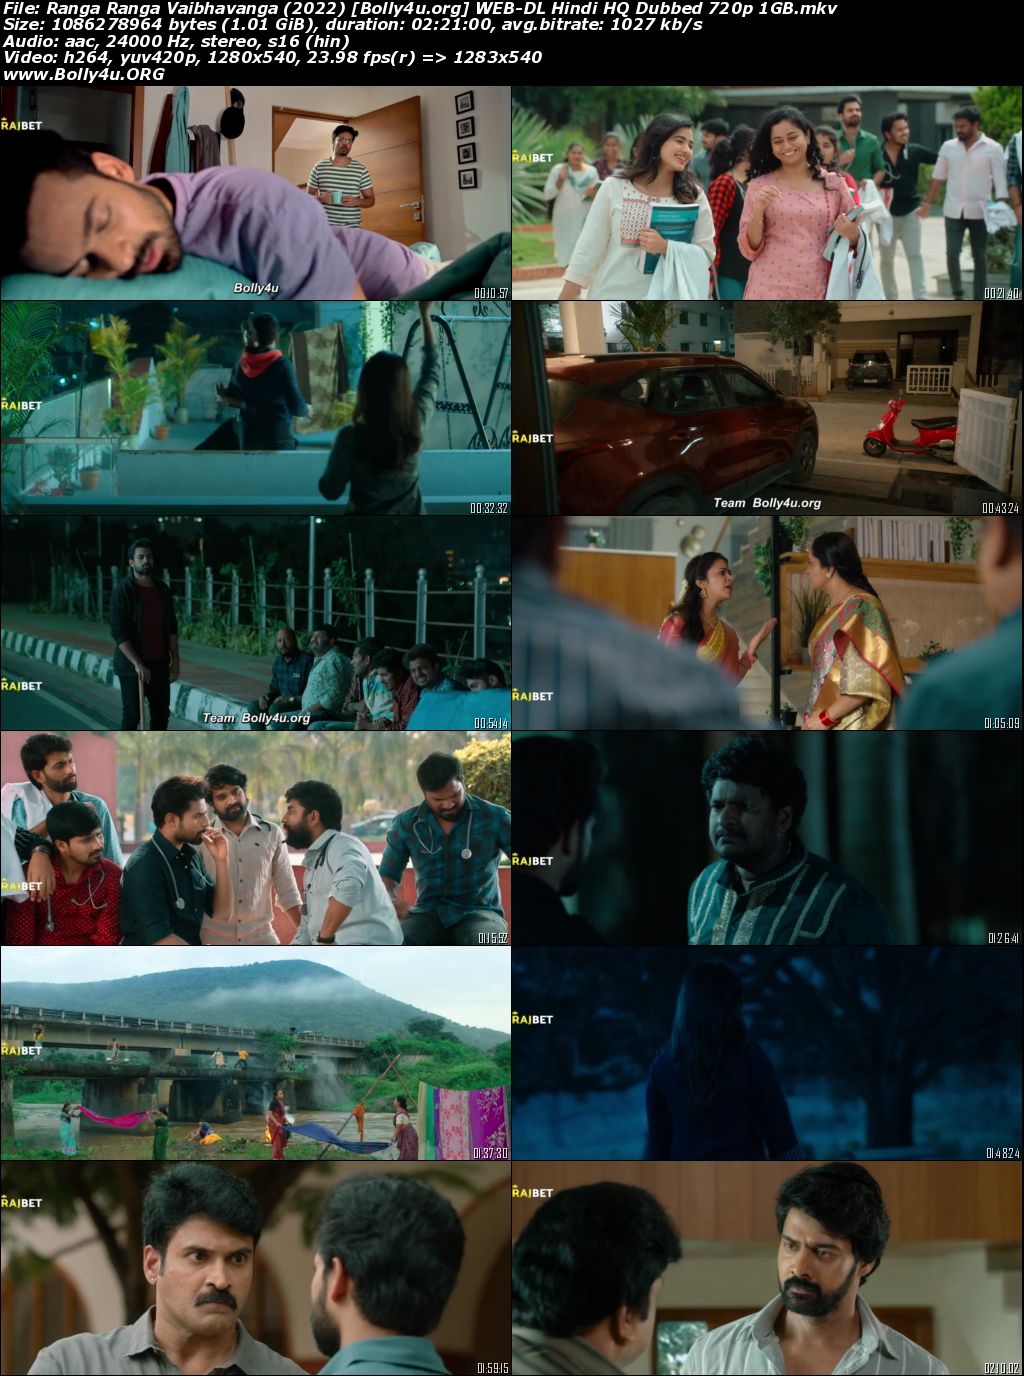 Ranga Ranga Vaibhavanga 2022 WEBRip Hindi HQ Dubbed Full Movie Download 1080p 720p 480p